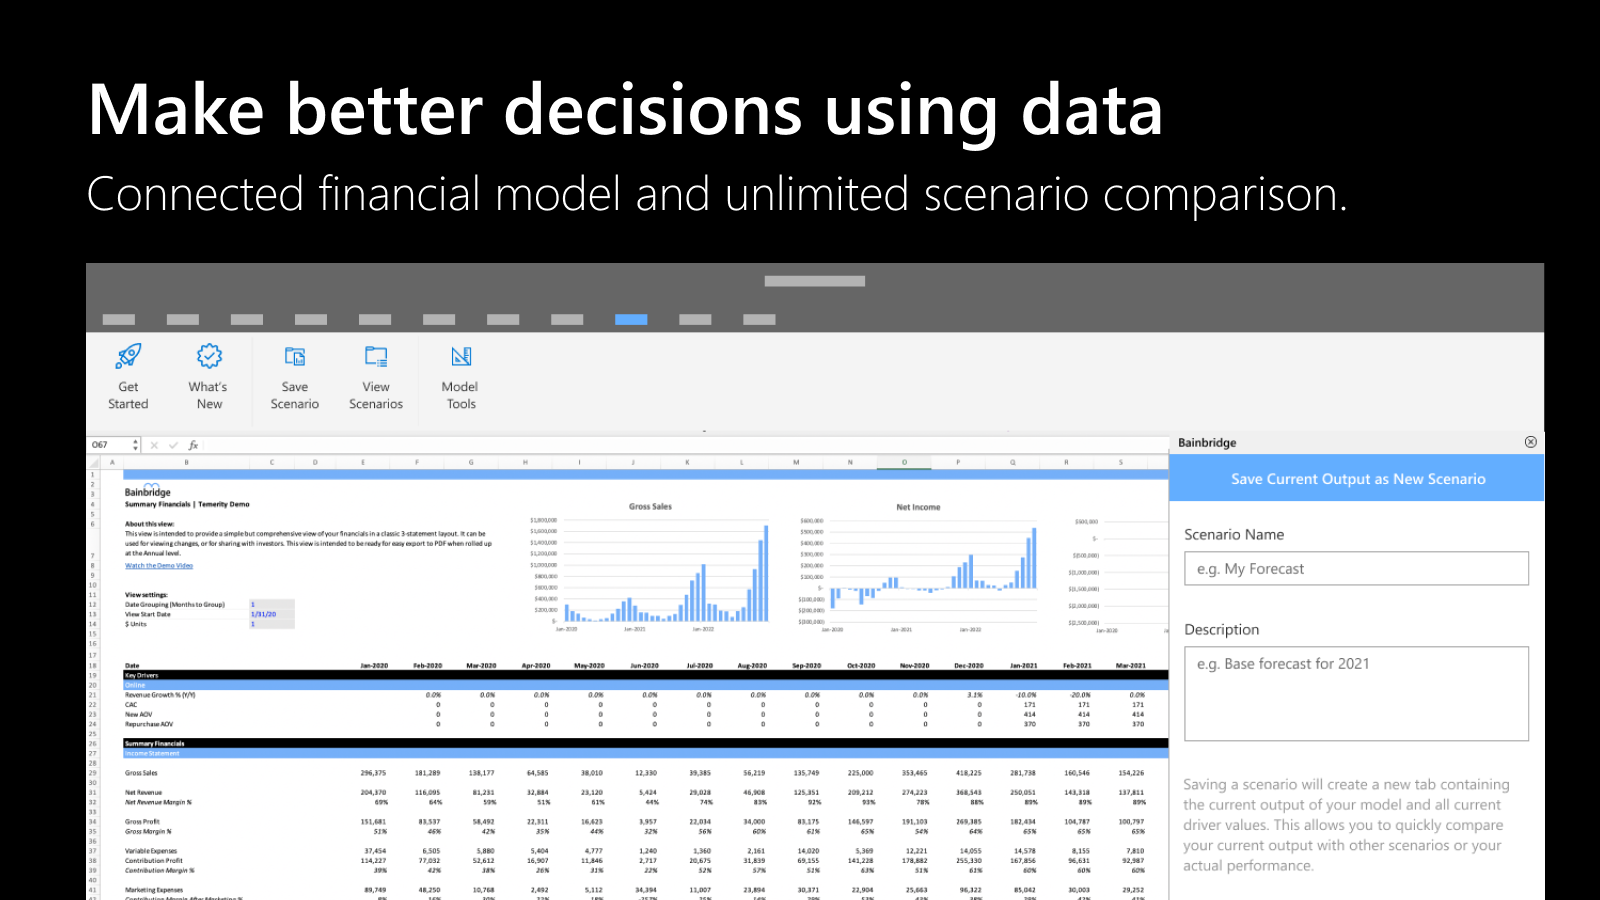 Make better decisions using data